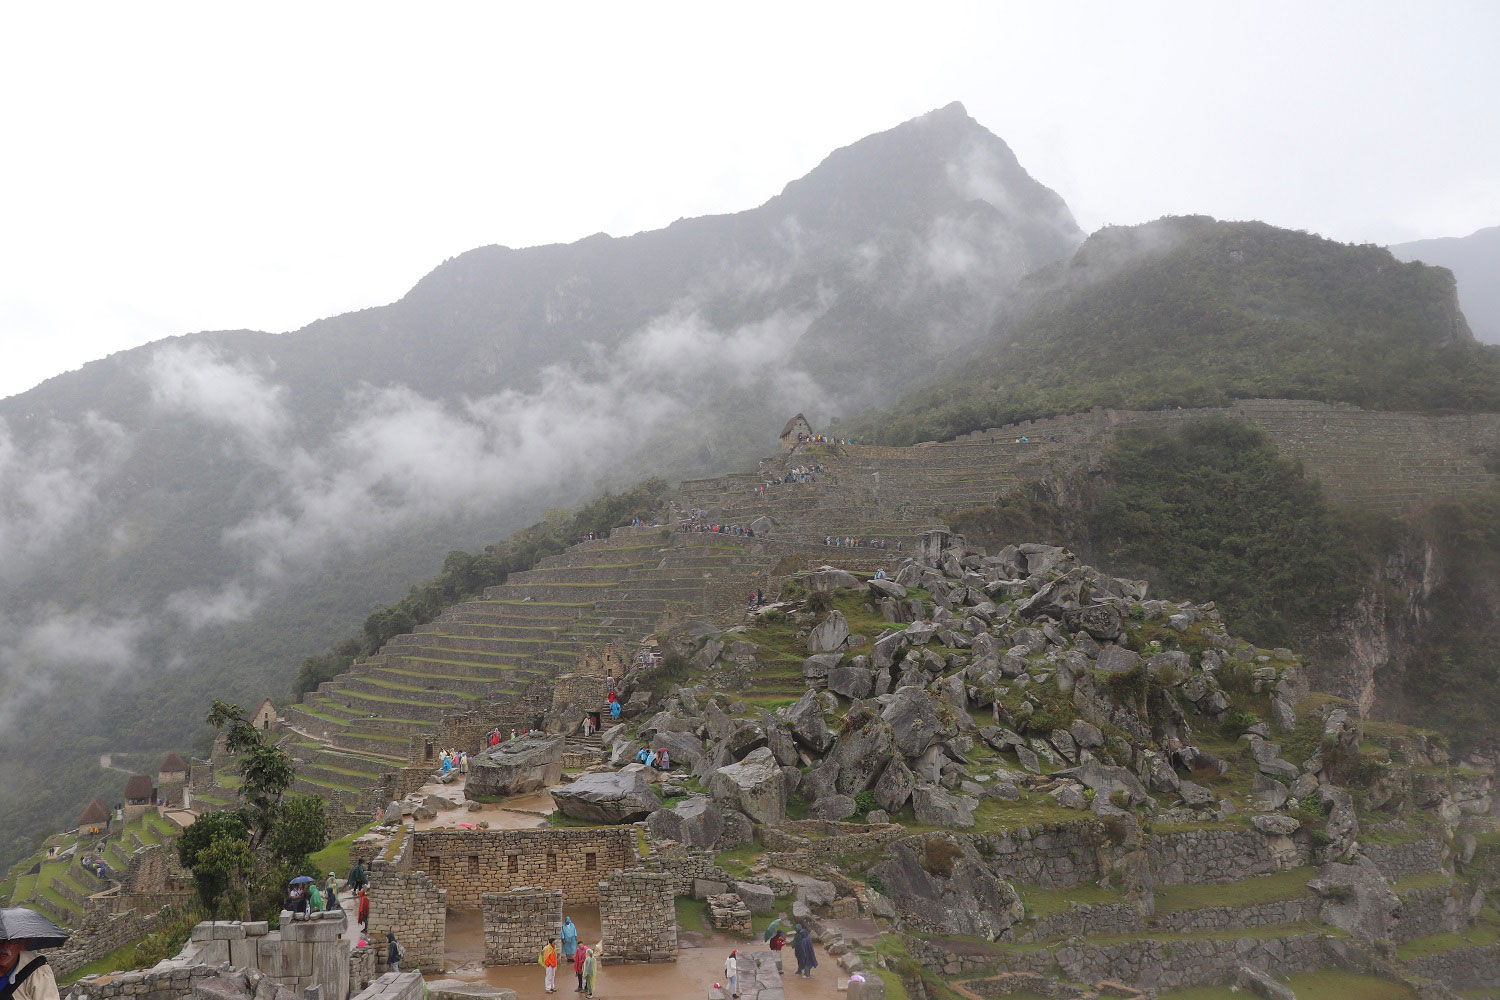 The stone quarry of Machu Picchu